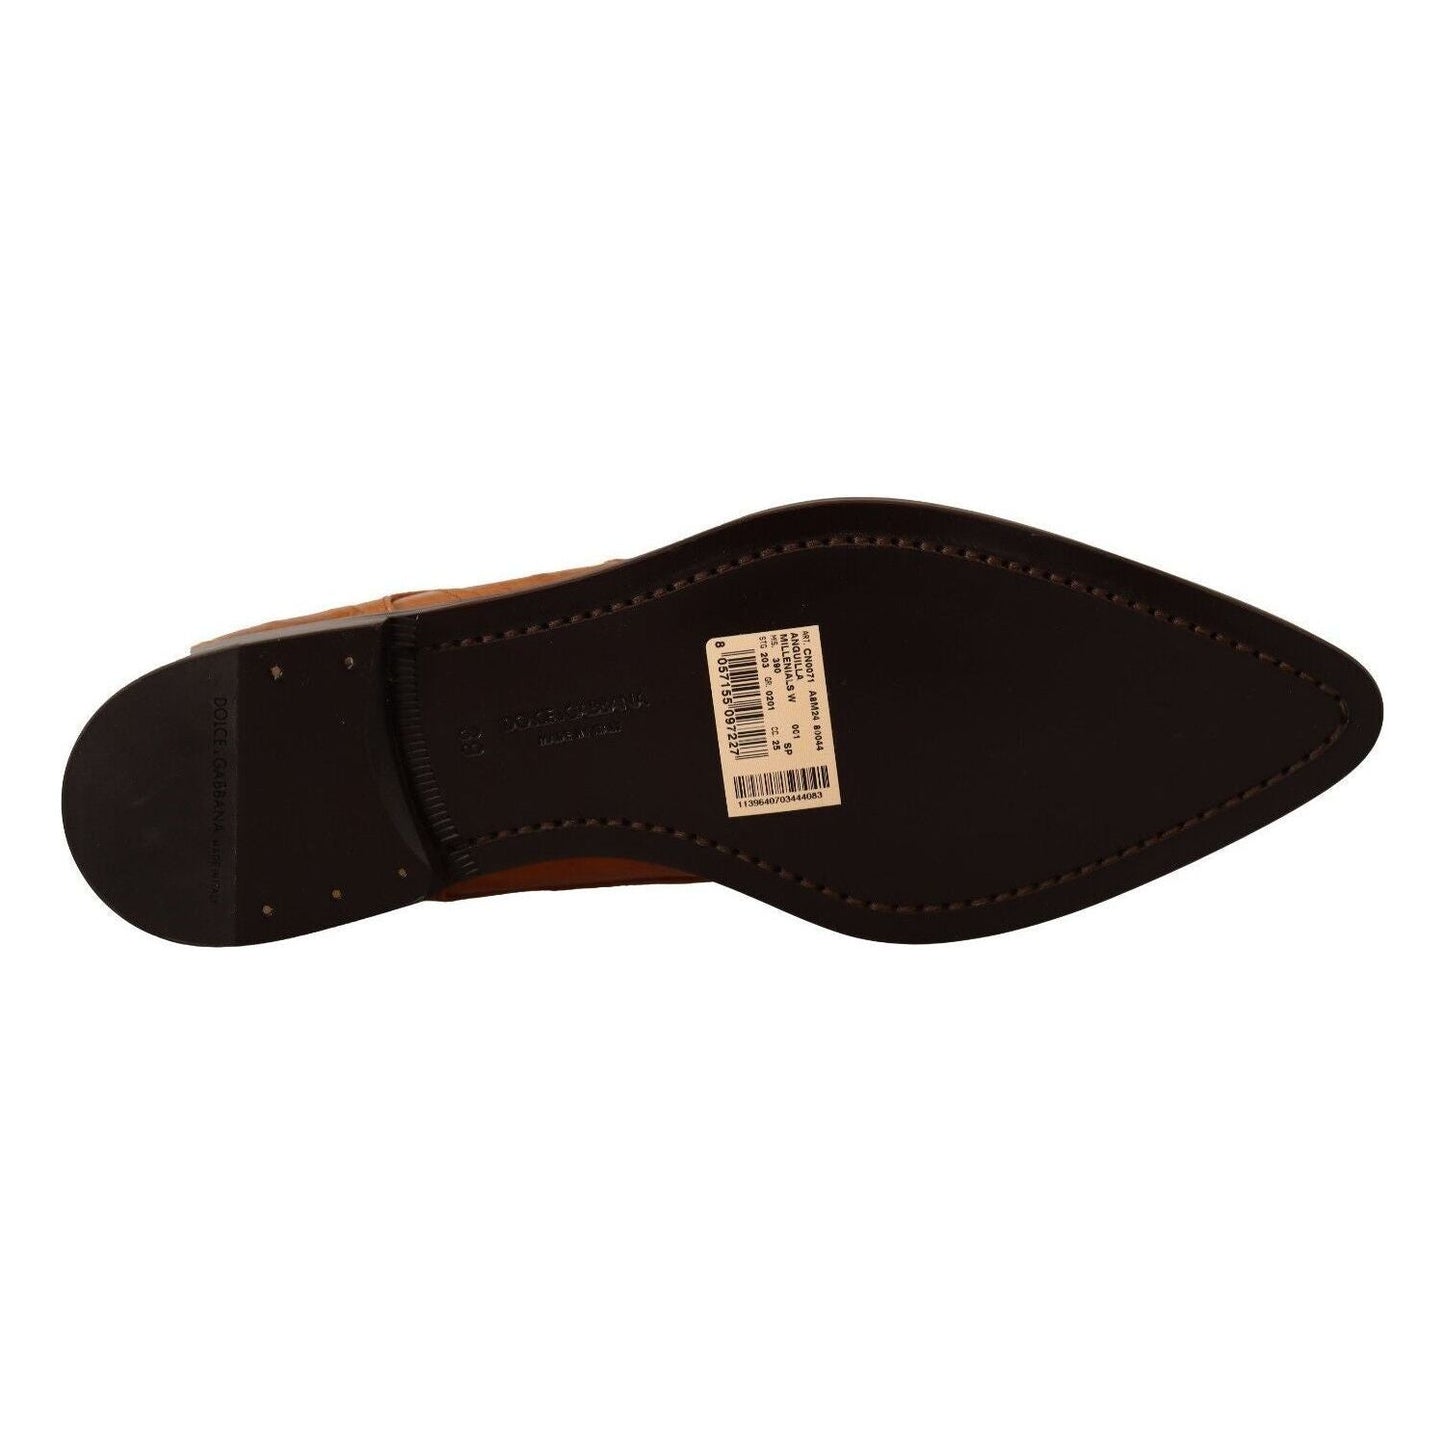 Dolce & Gabbana Elegant Eel Leather Lace-Up Formal Flats brown-eel-leather-lace-up-formal-shoes s-l1600-4-76-527de2a1-9ec.jpg